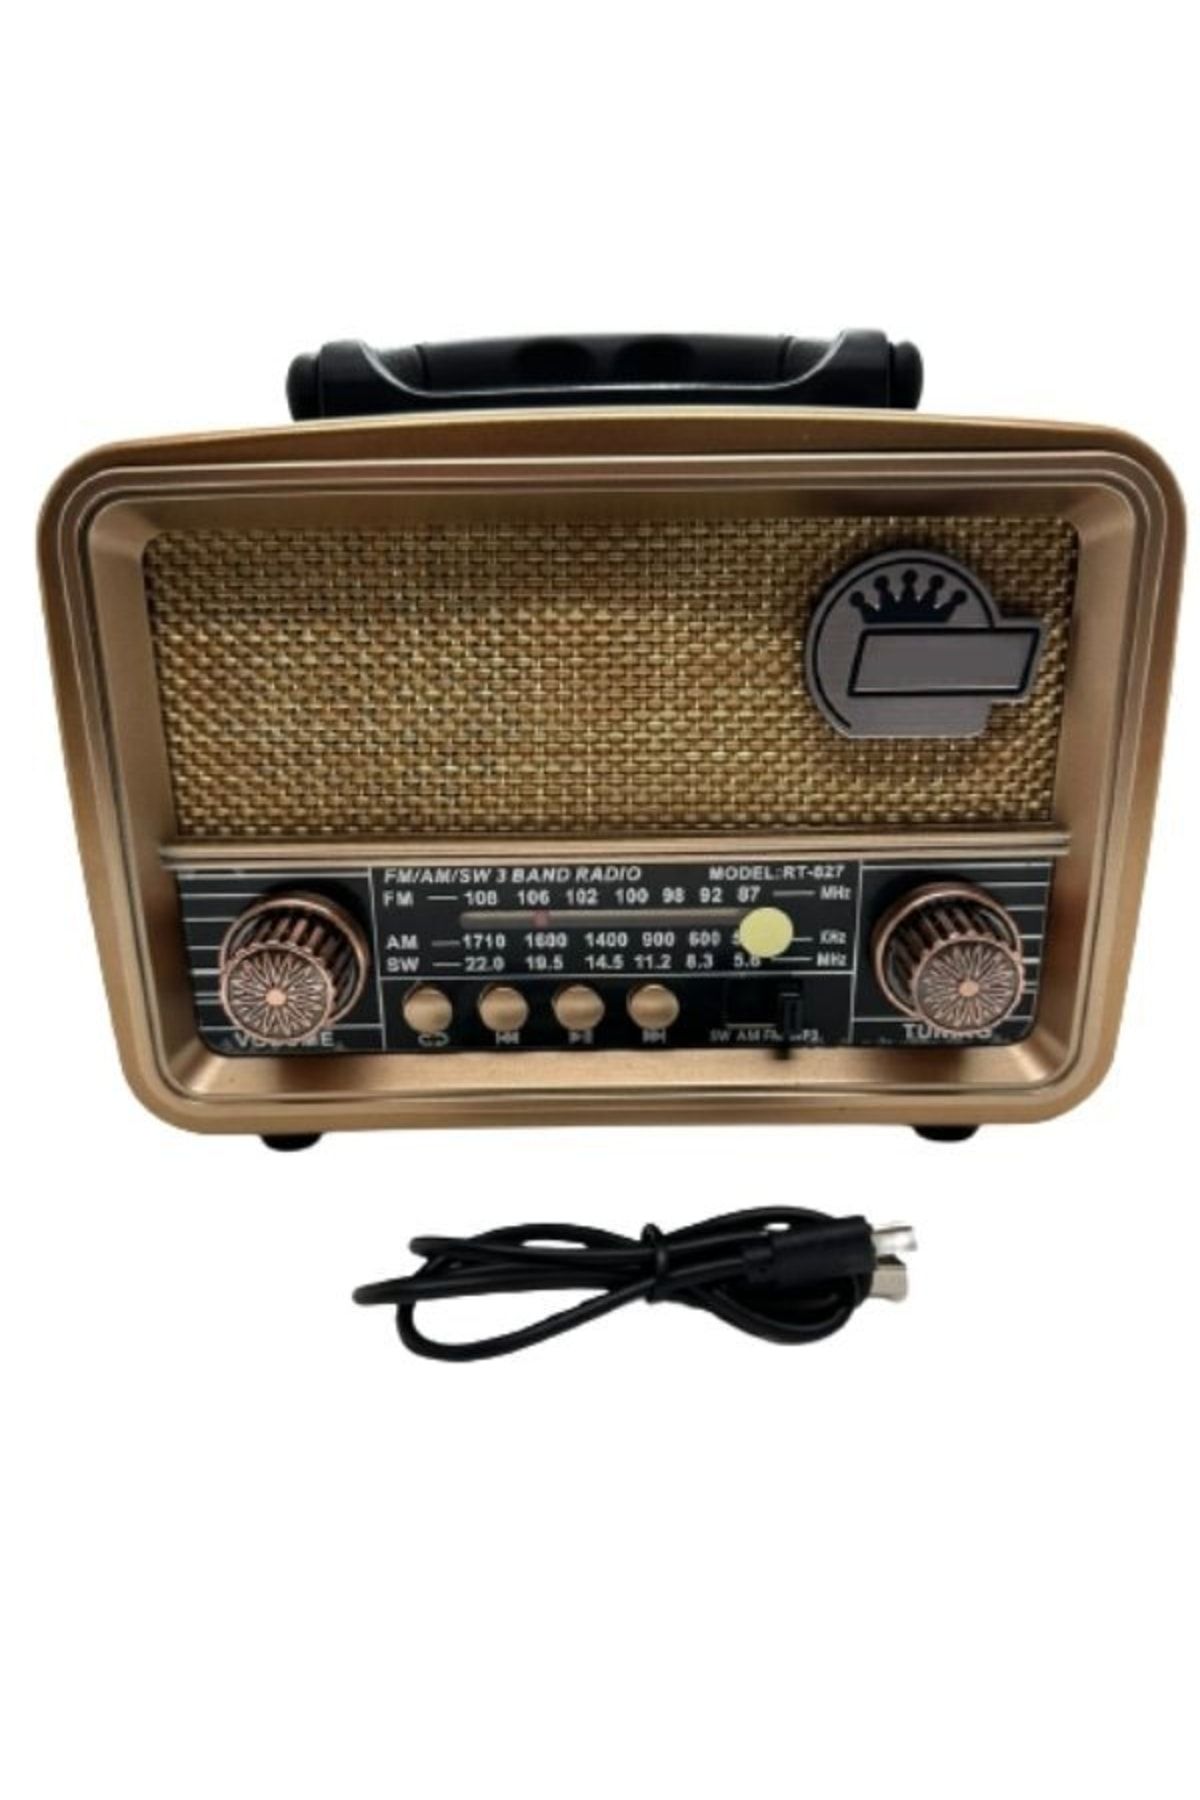 ataşbey Rt-827 Orta Boy Güneş Enerjili Bluetooth, Nostalji , Fm/am/sw 3 Band Radyo ,usb, Sd ,aux Mp3 Player